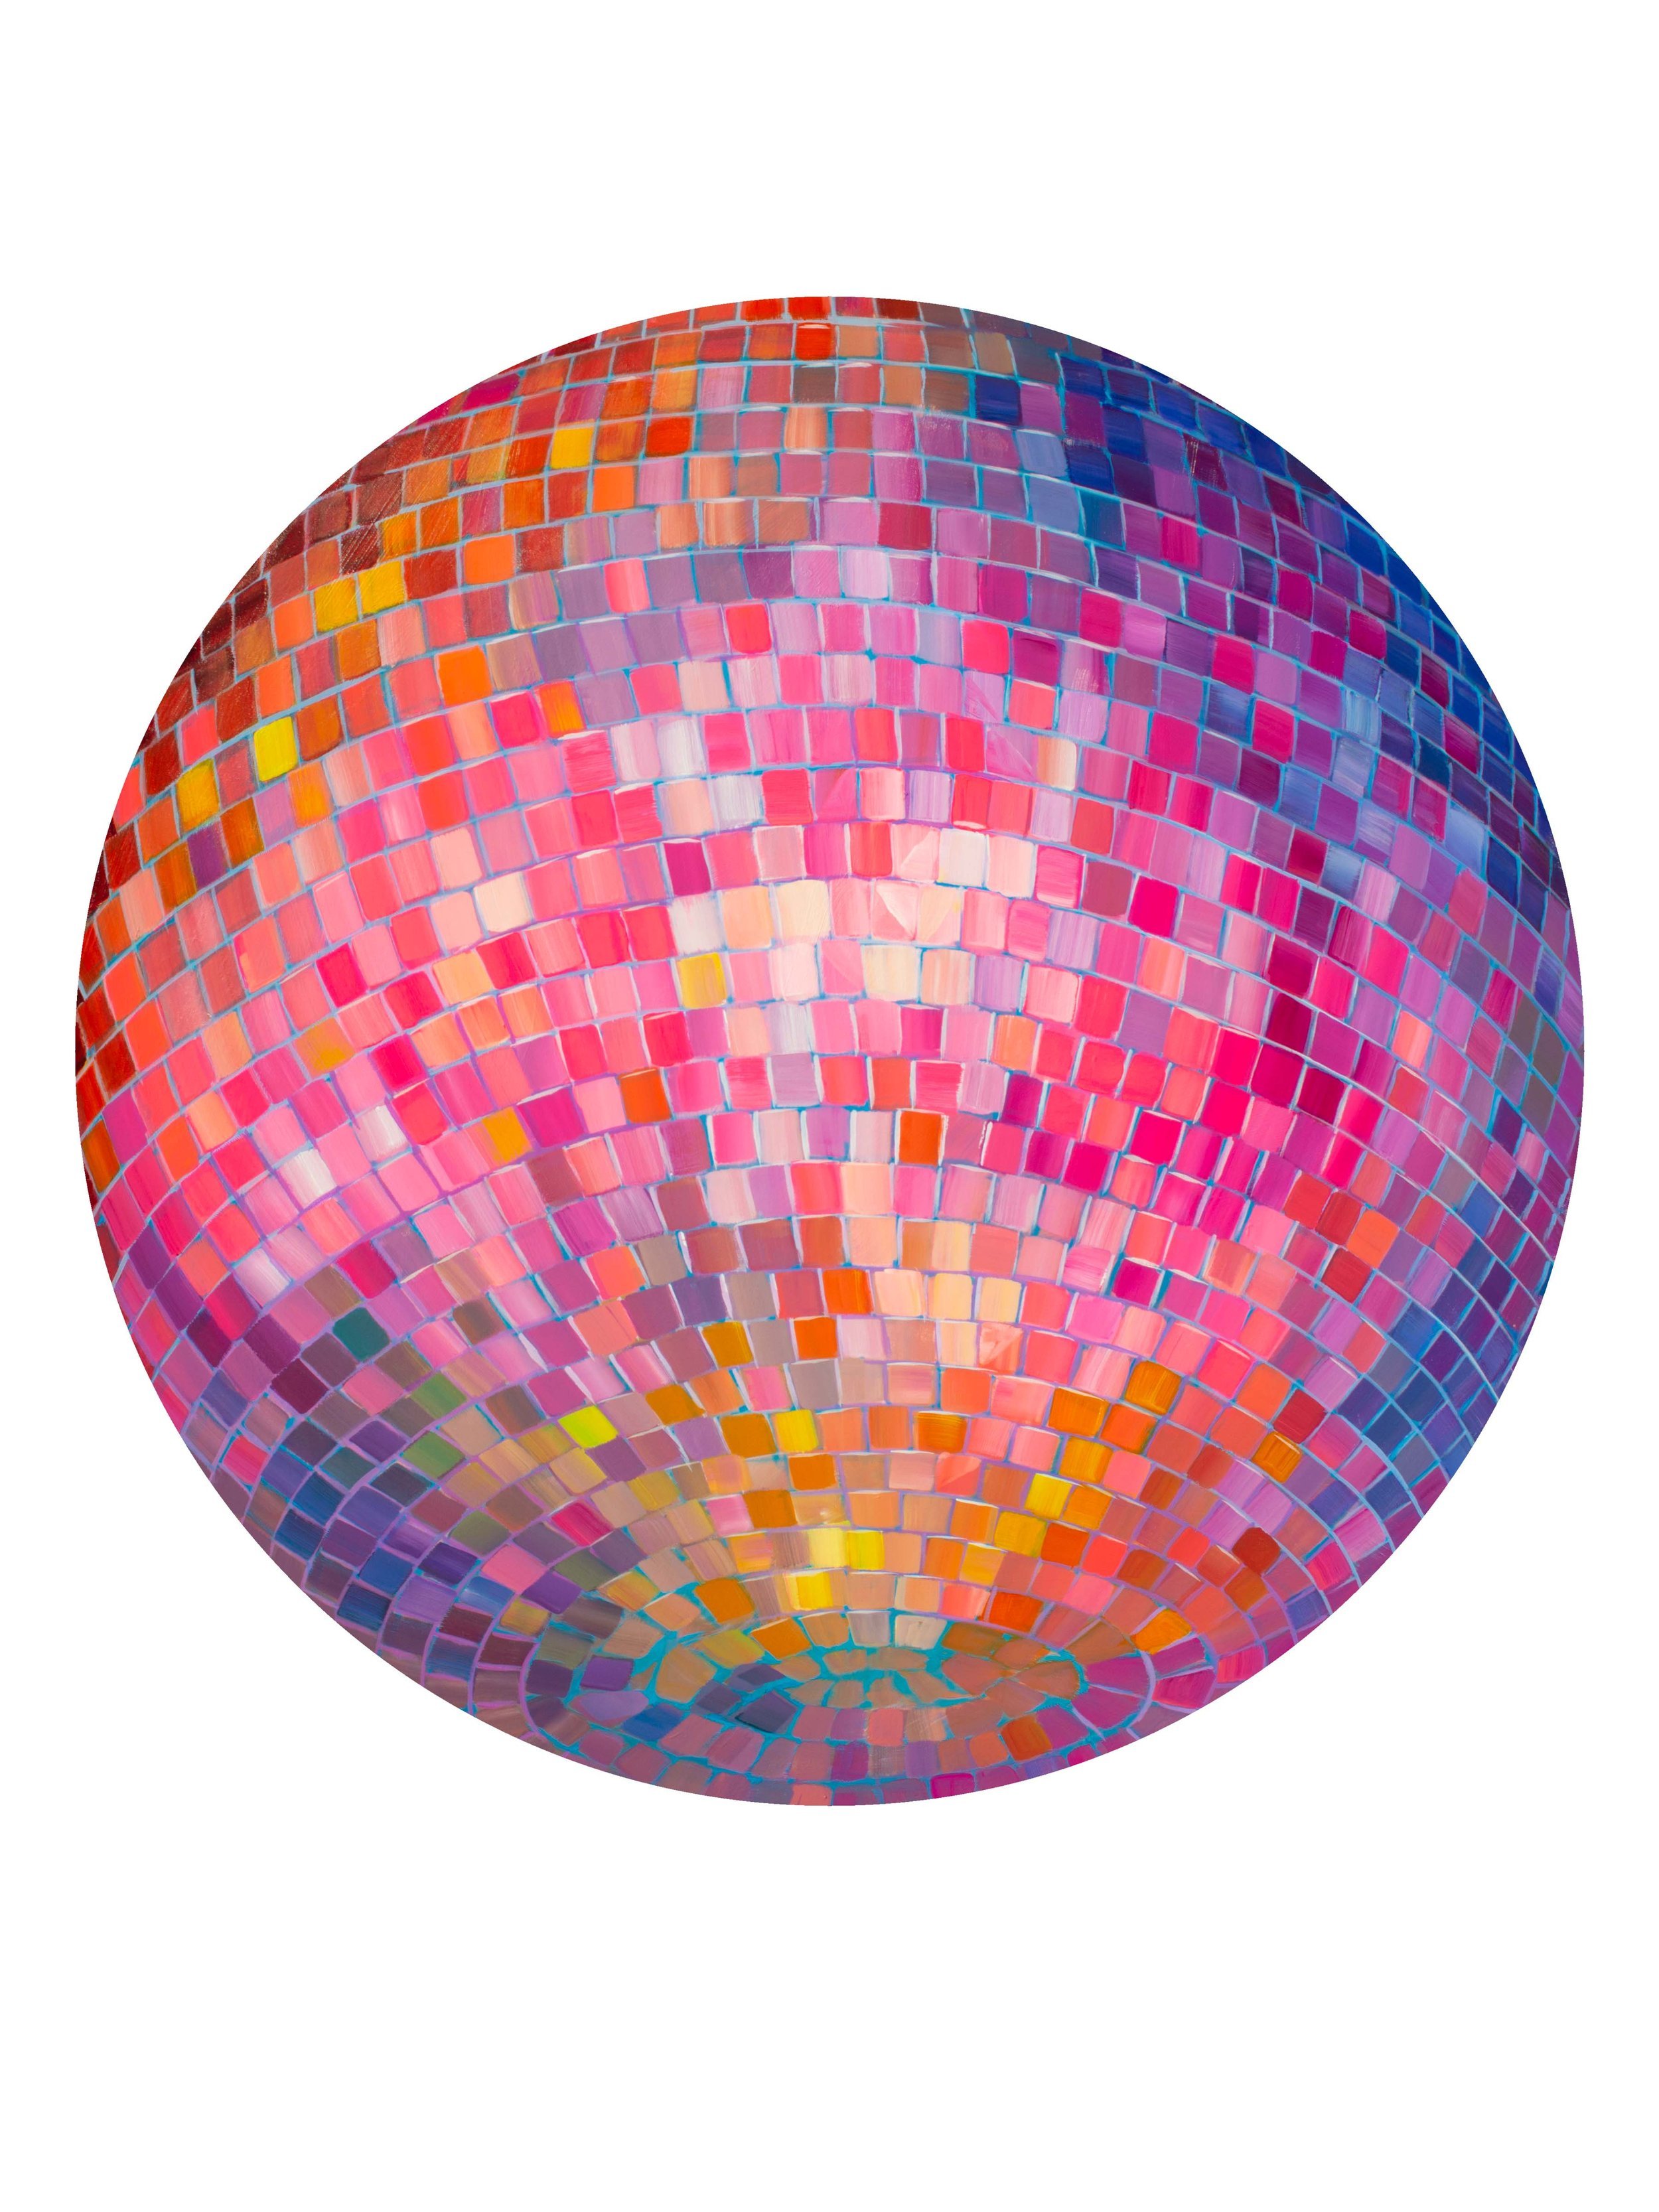 Canvas print Pink disco ball